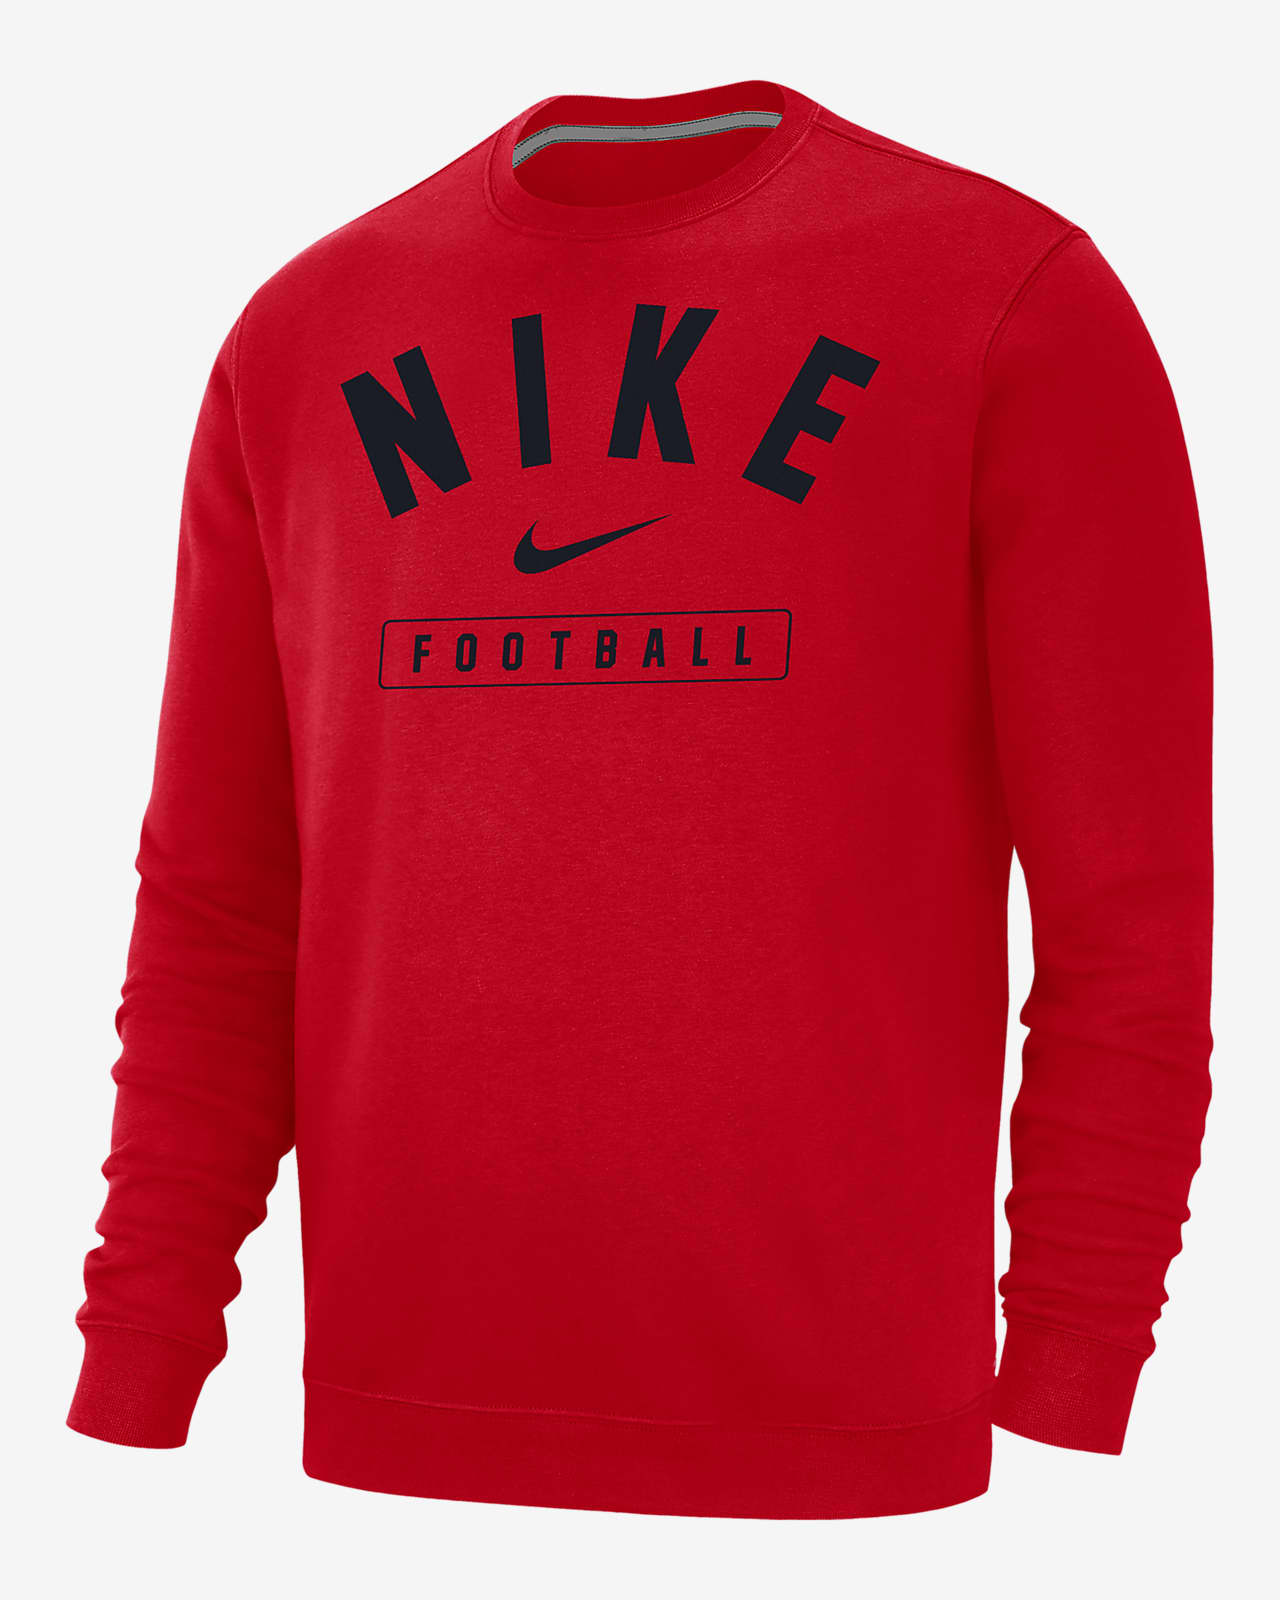 Nike Football Men's Crew-Neck Sweatshirt